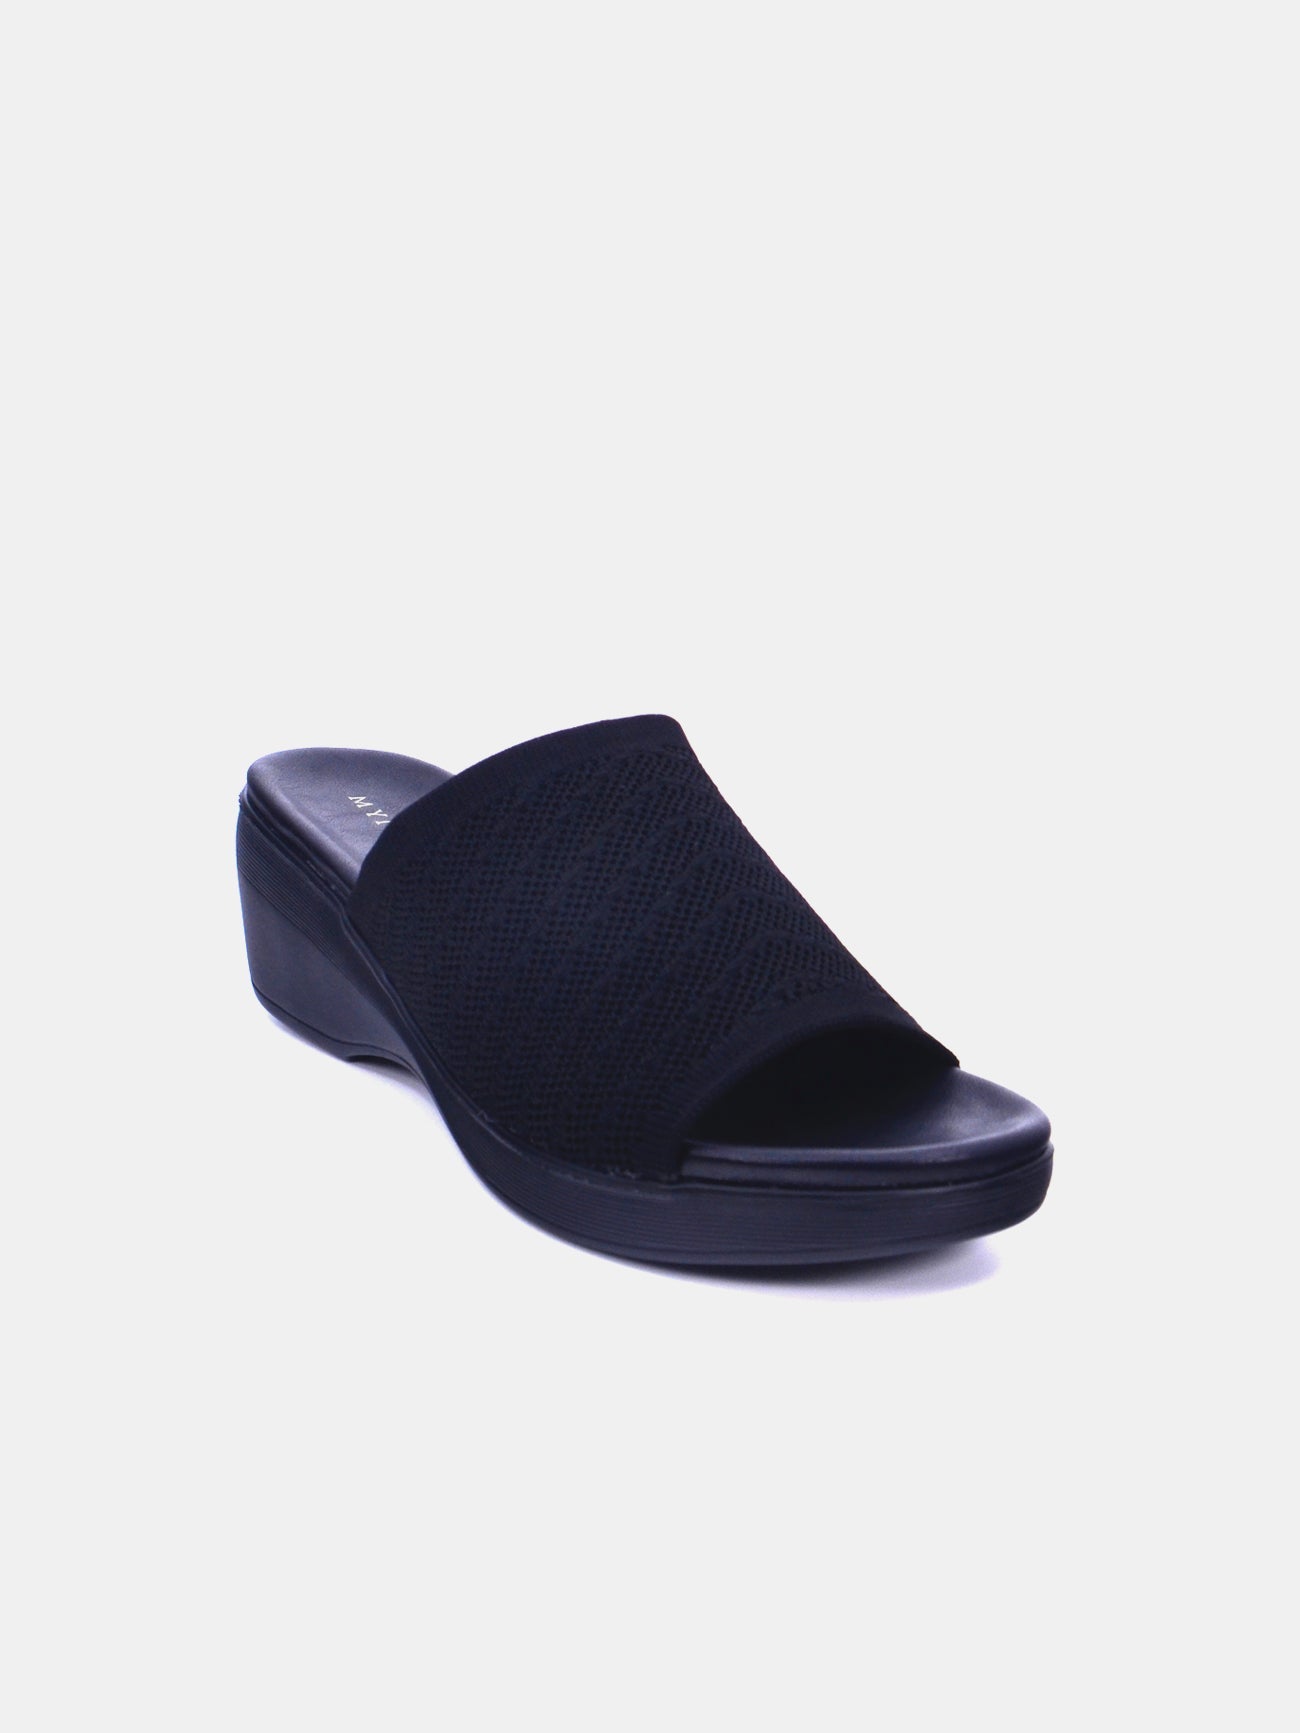 Mynaal Oliviera Women's Wedge Sandals #color_Black